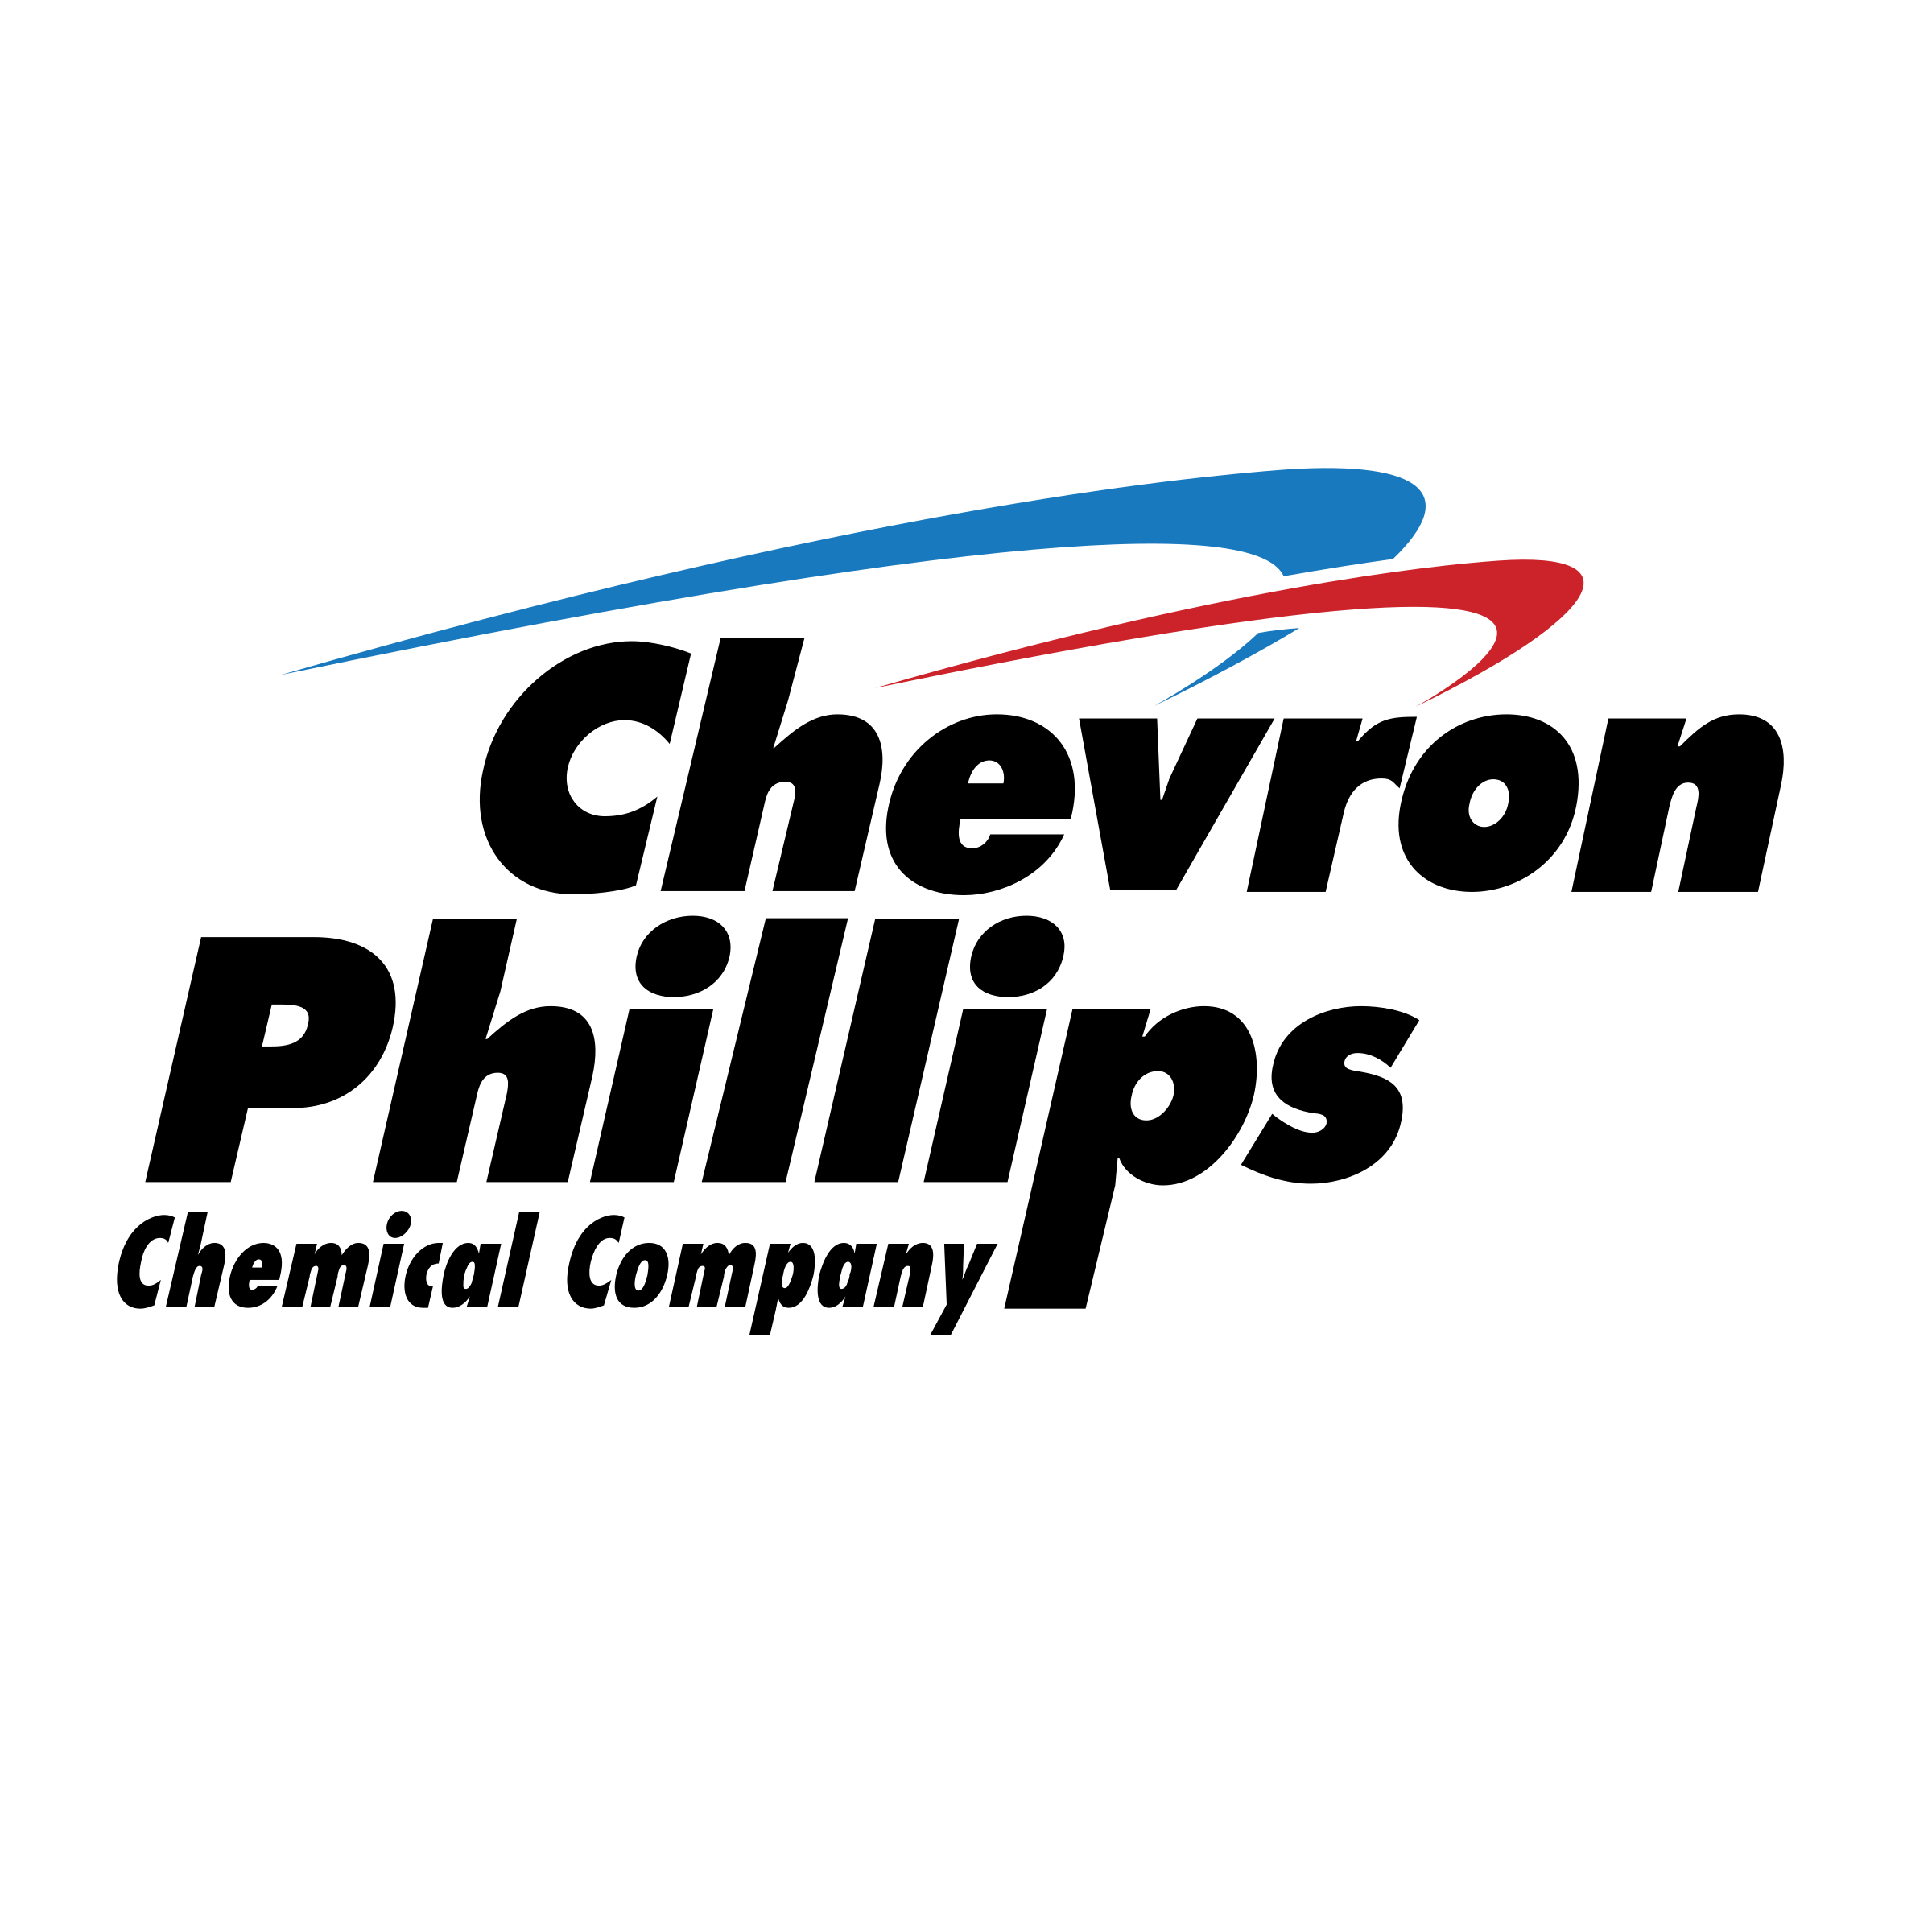 Phillips Supply Logo - Chevron Phillips Logo PNG Transparent & SVG Vector - Freebie Supply